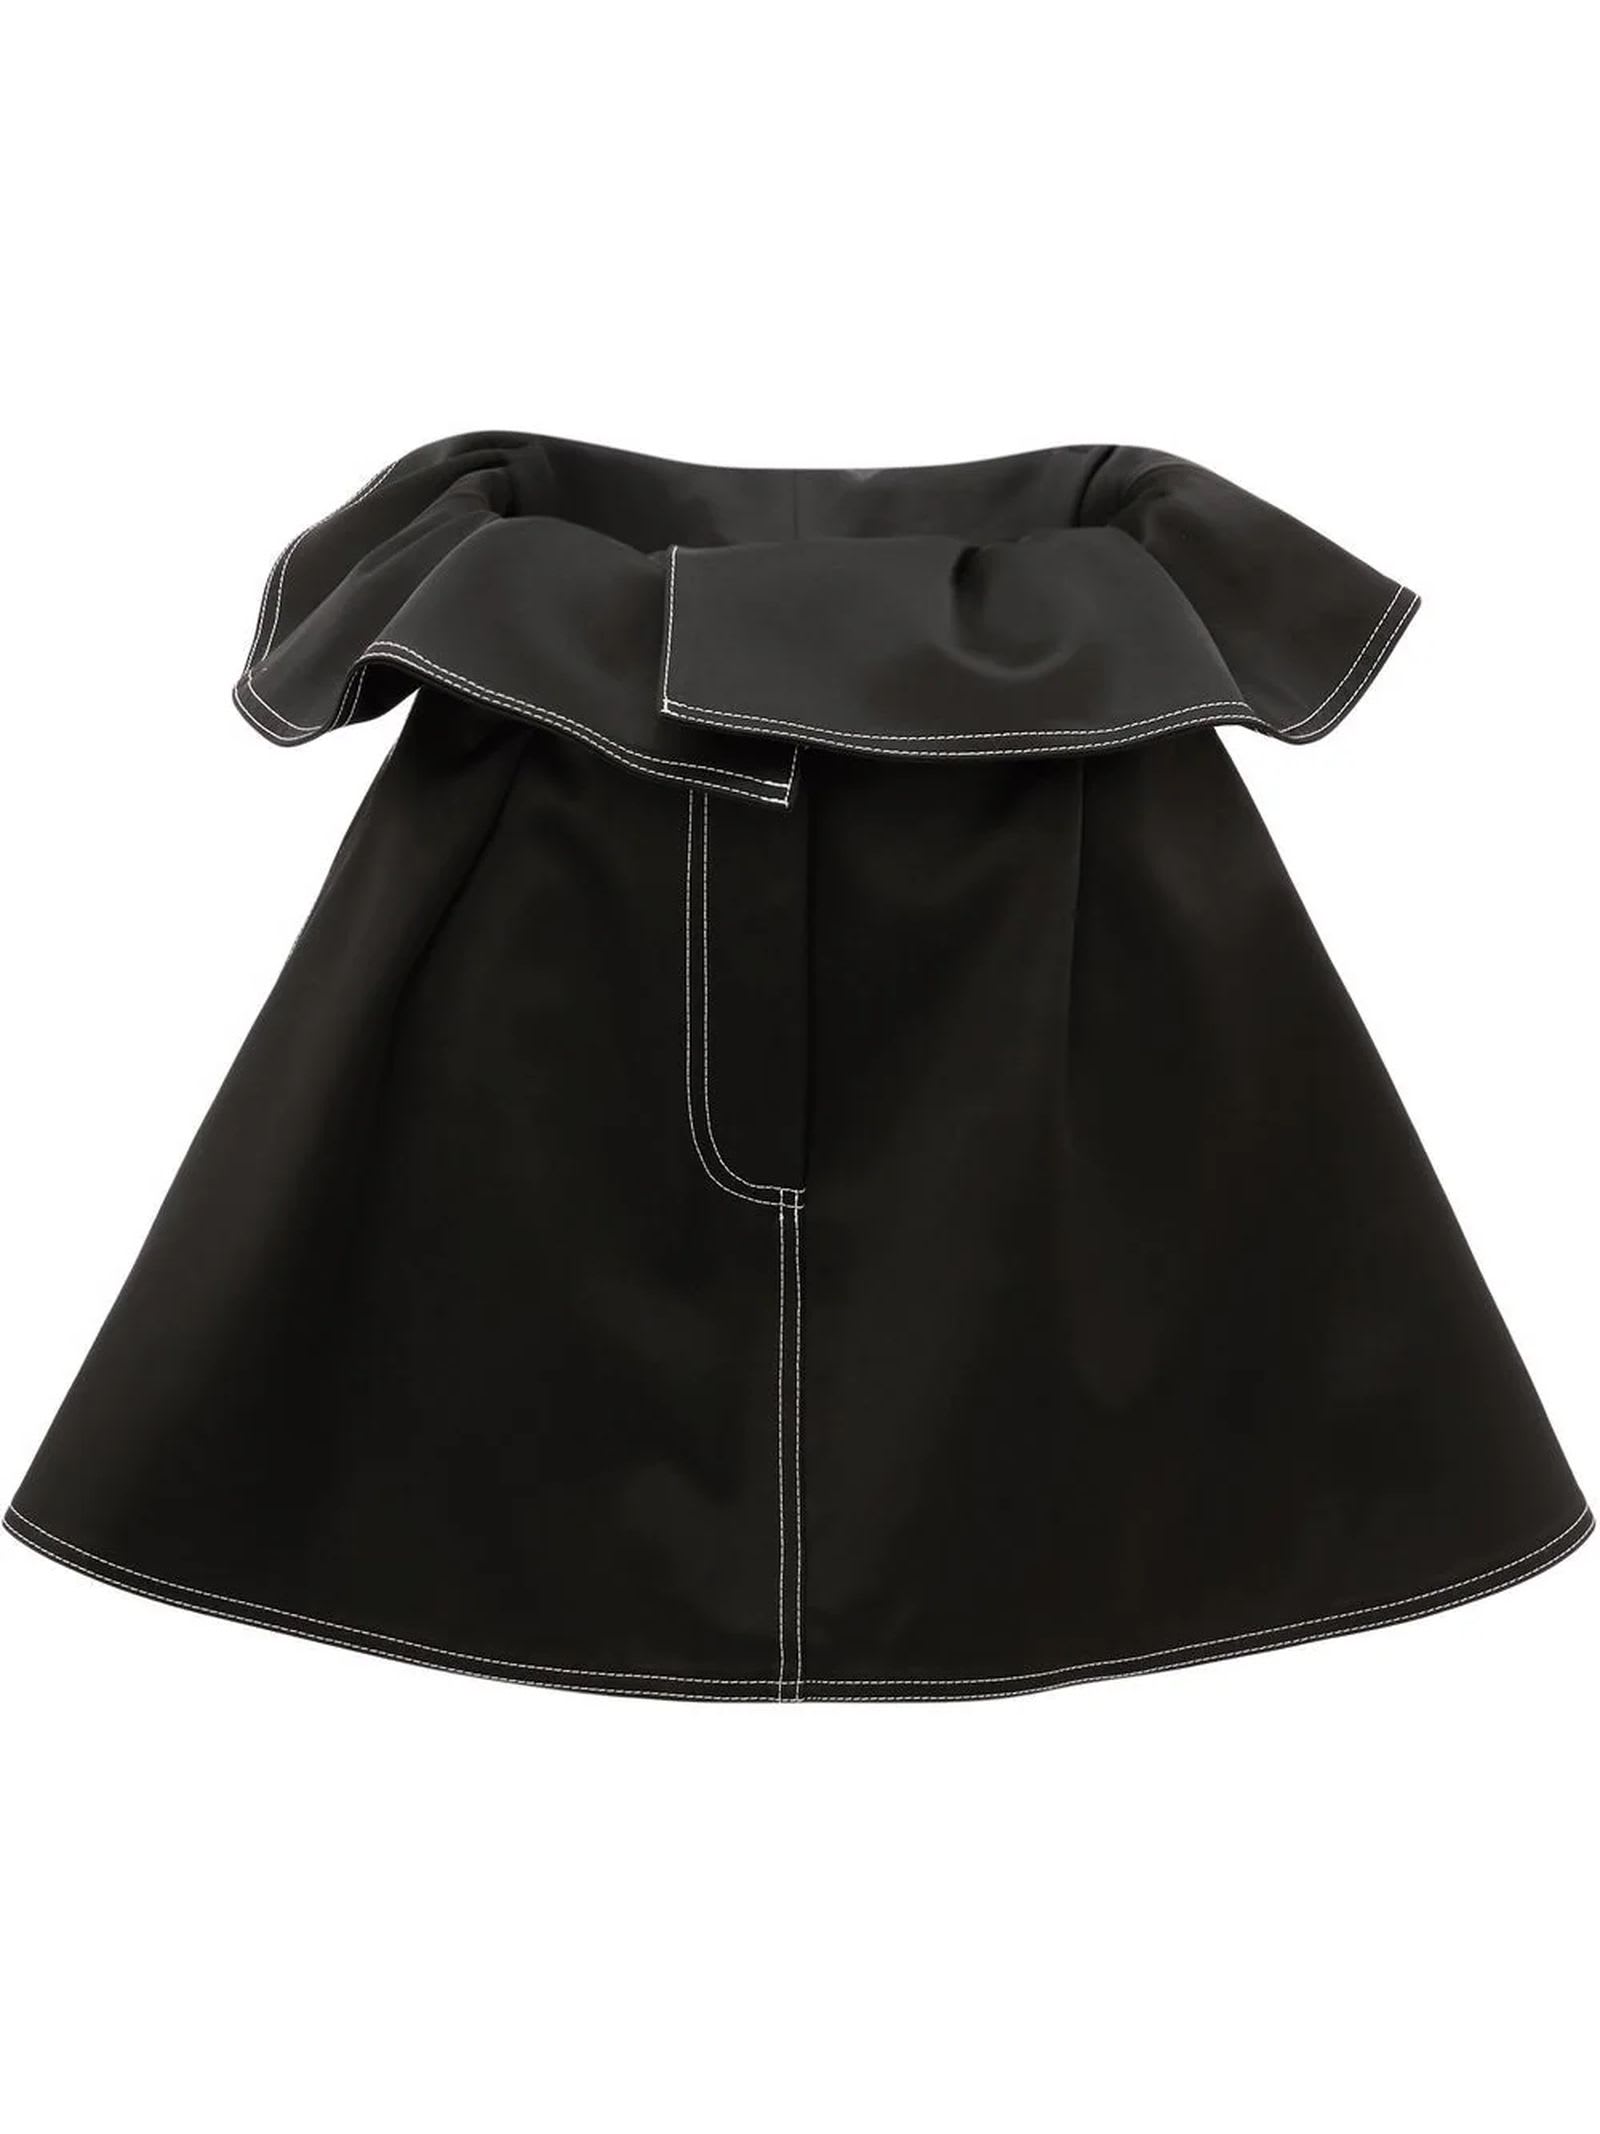 J.W. Anderson Black Skirt